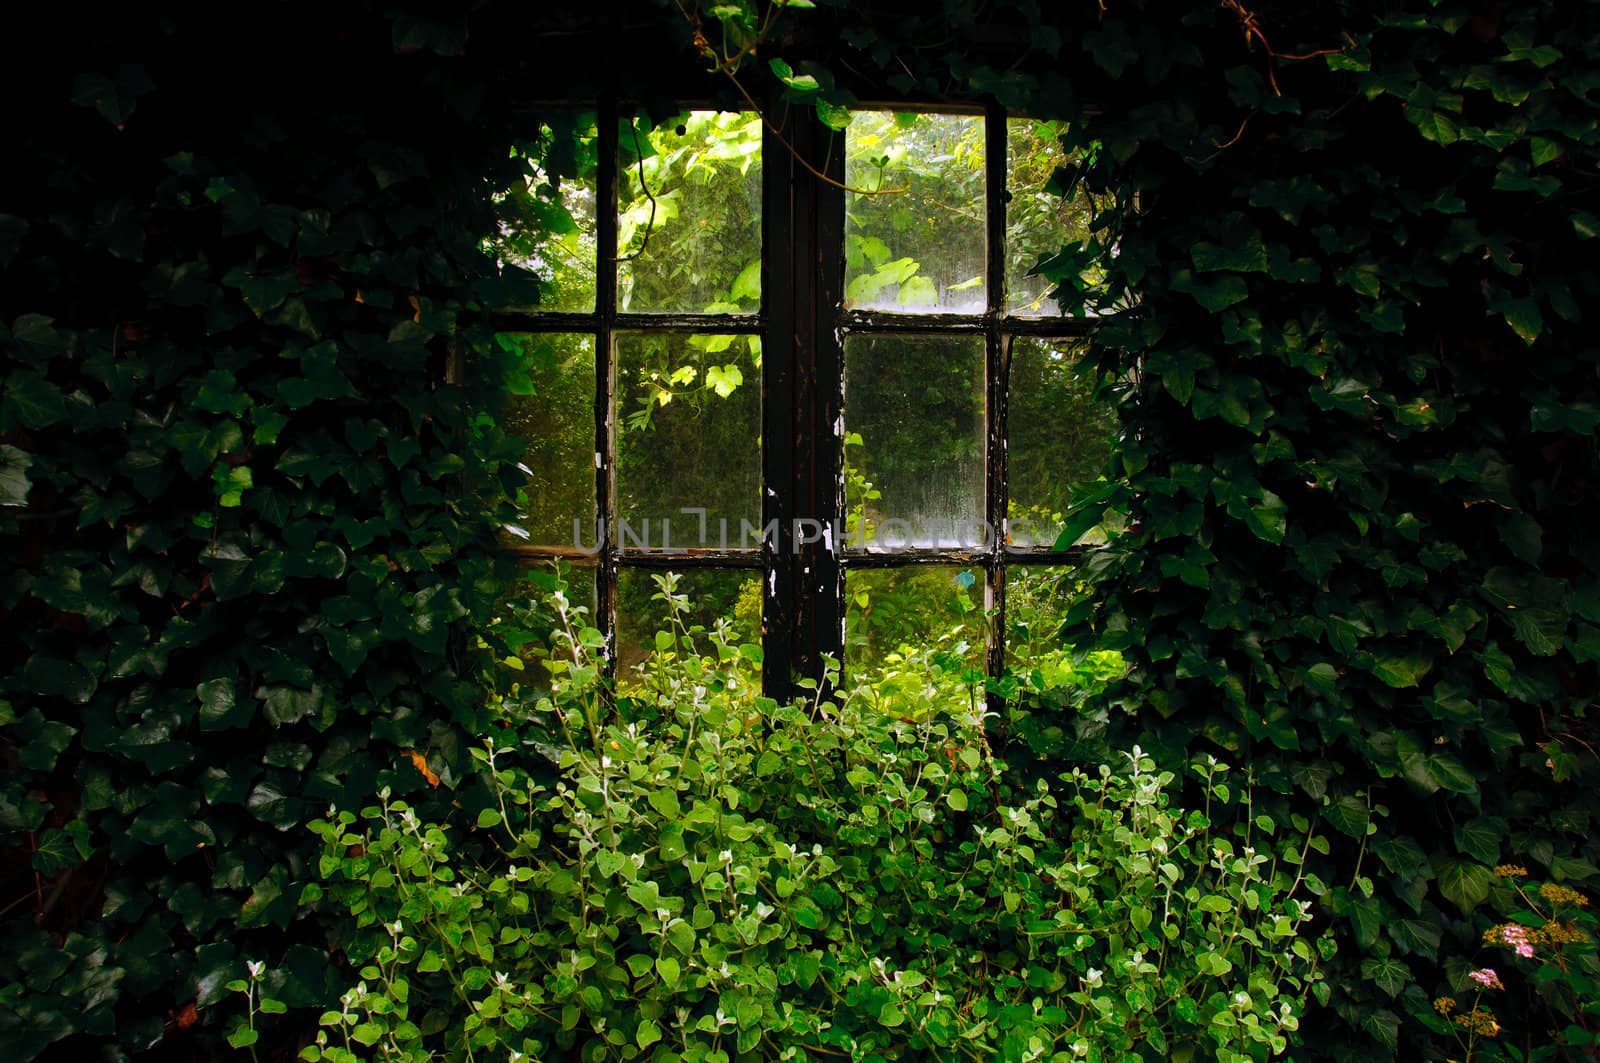 An almost overgrown window in a garden